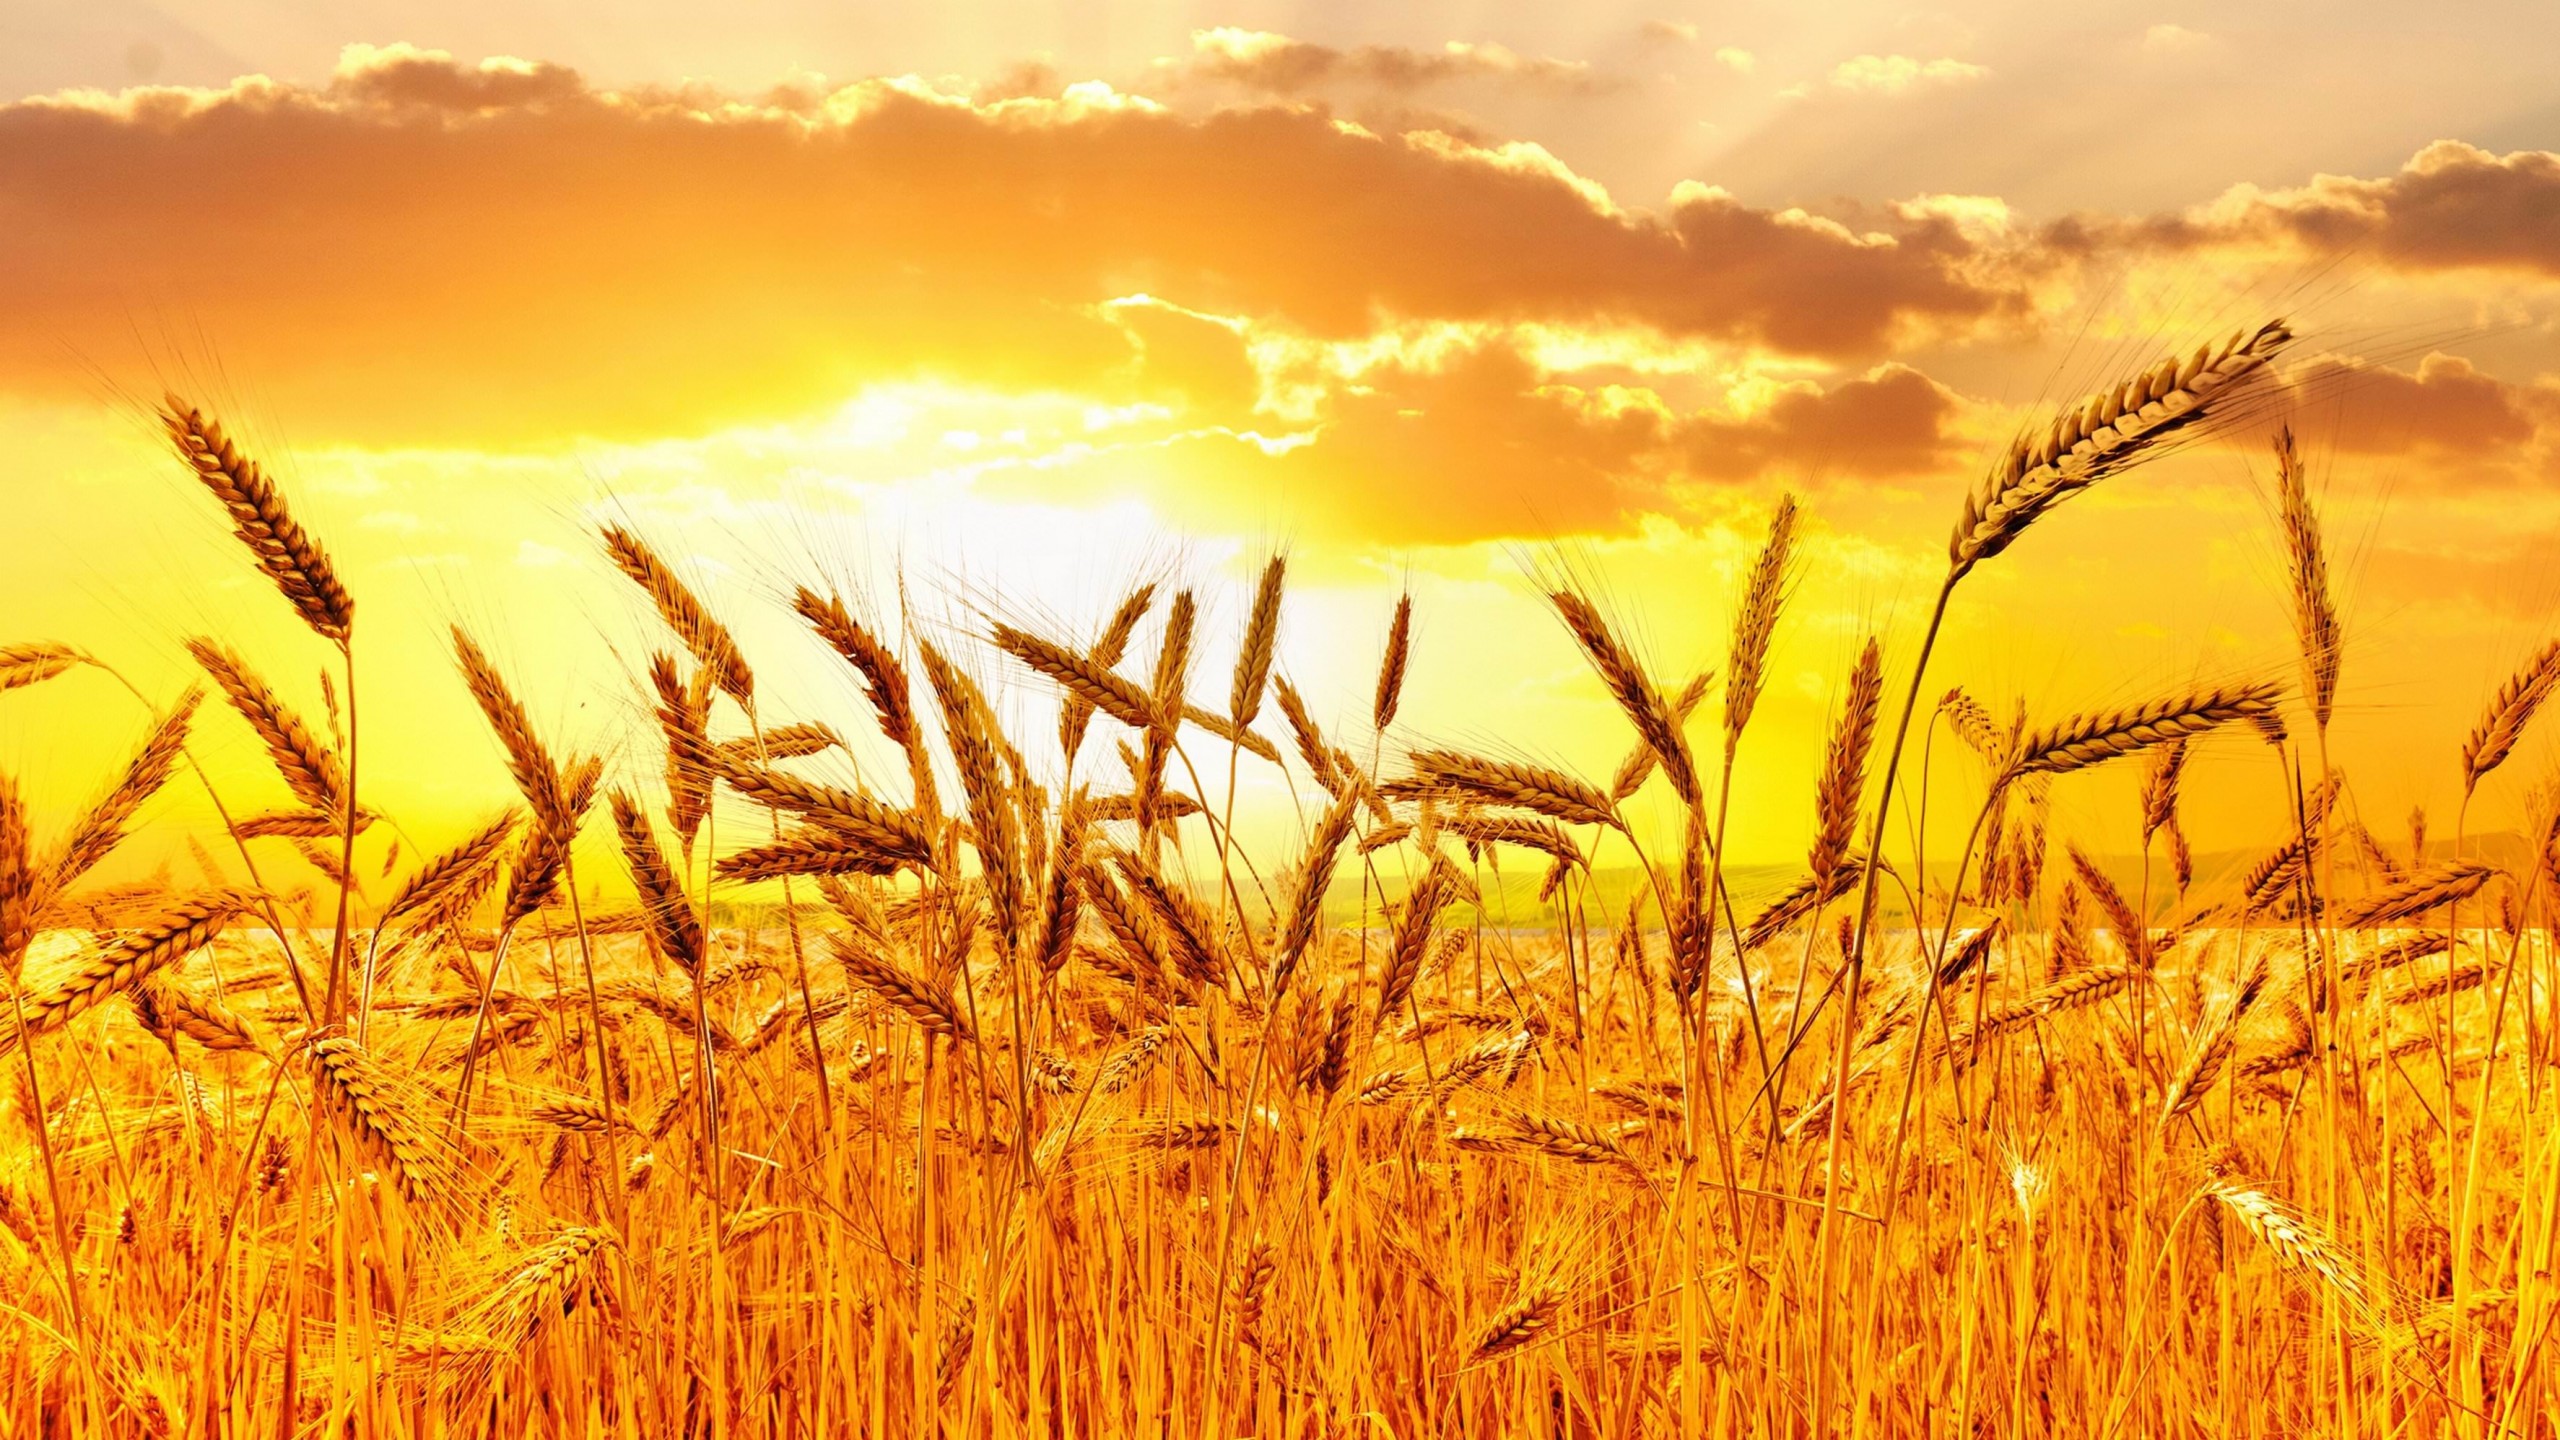 Golden Wheat Field At Sunset Wallpaper for Social Media YouTube Channel Art